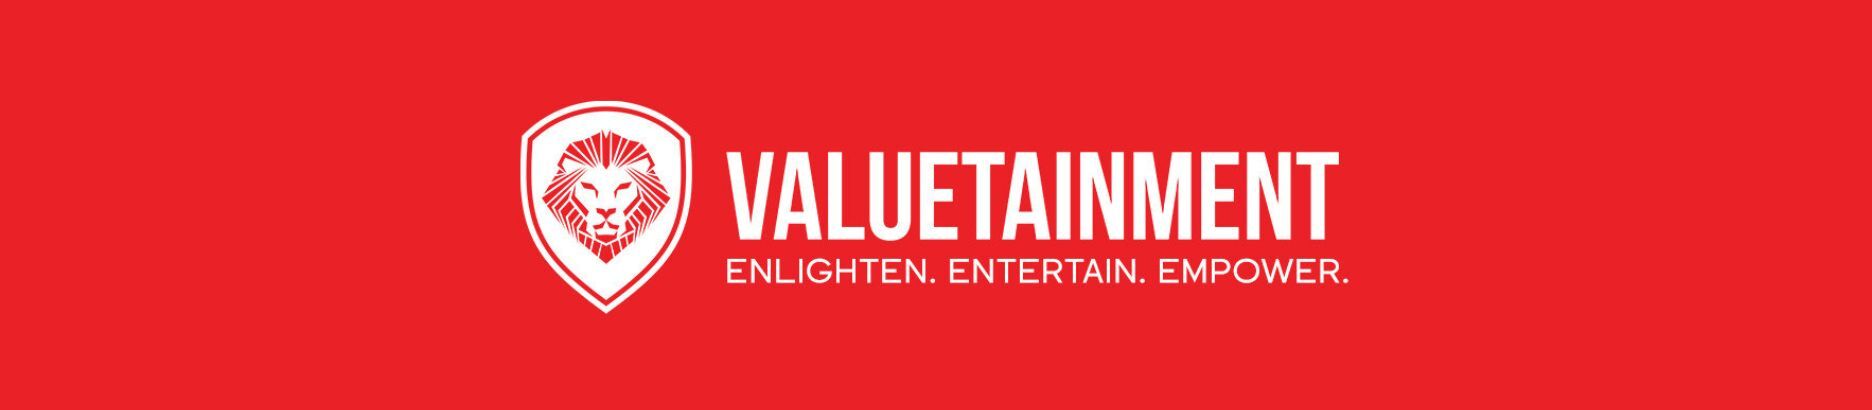 Valuetainment Membership banner